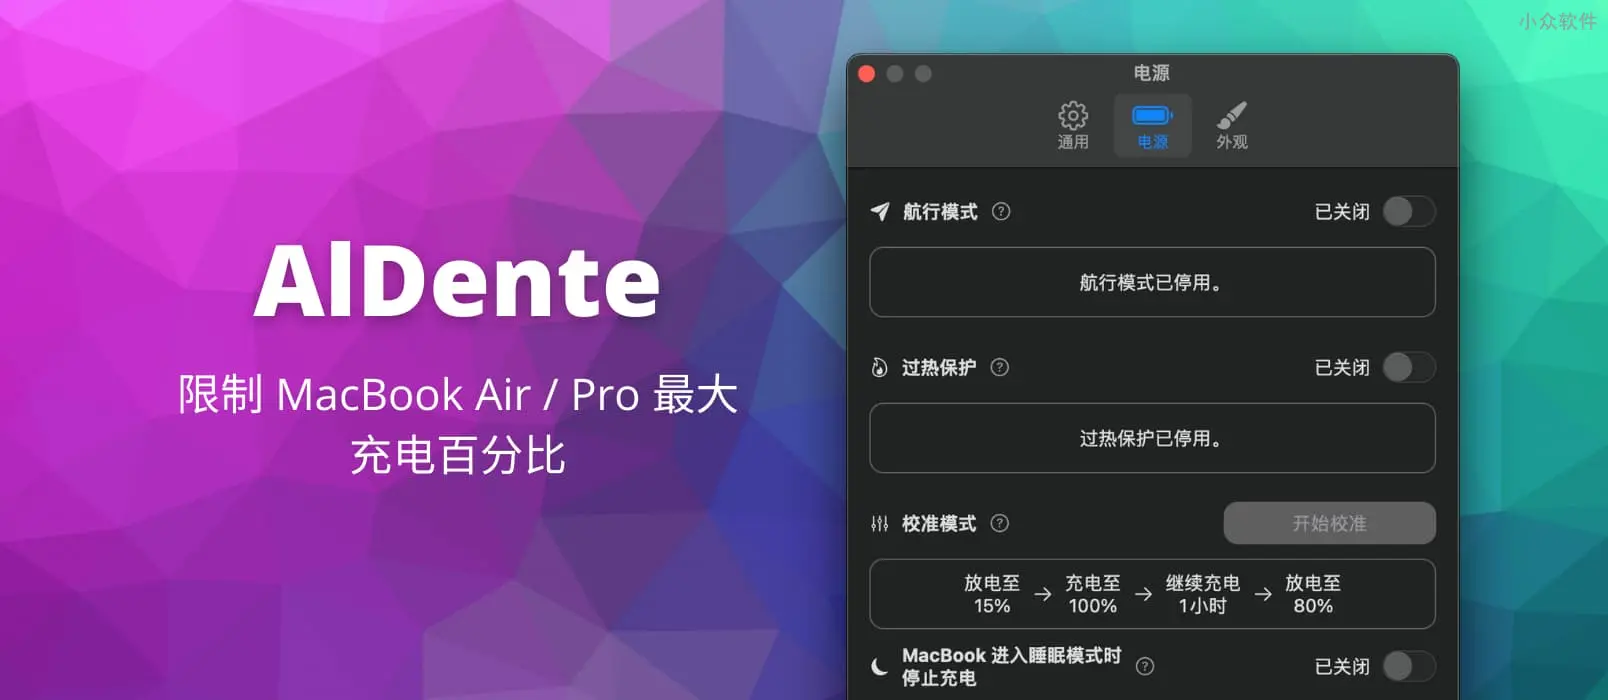 AlDente Pro 1.22.2 破解版免费下载|macOS - 哇哦菌